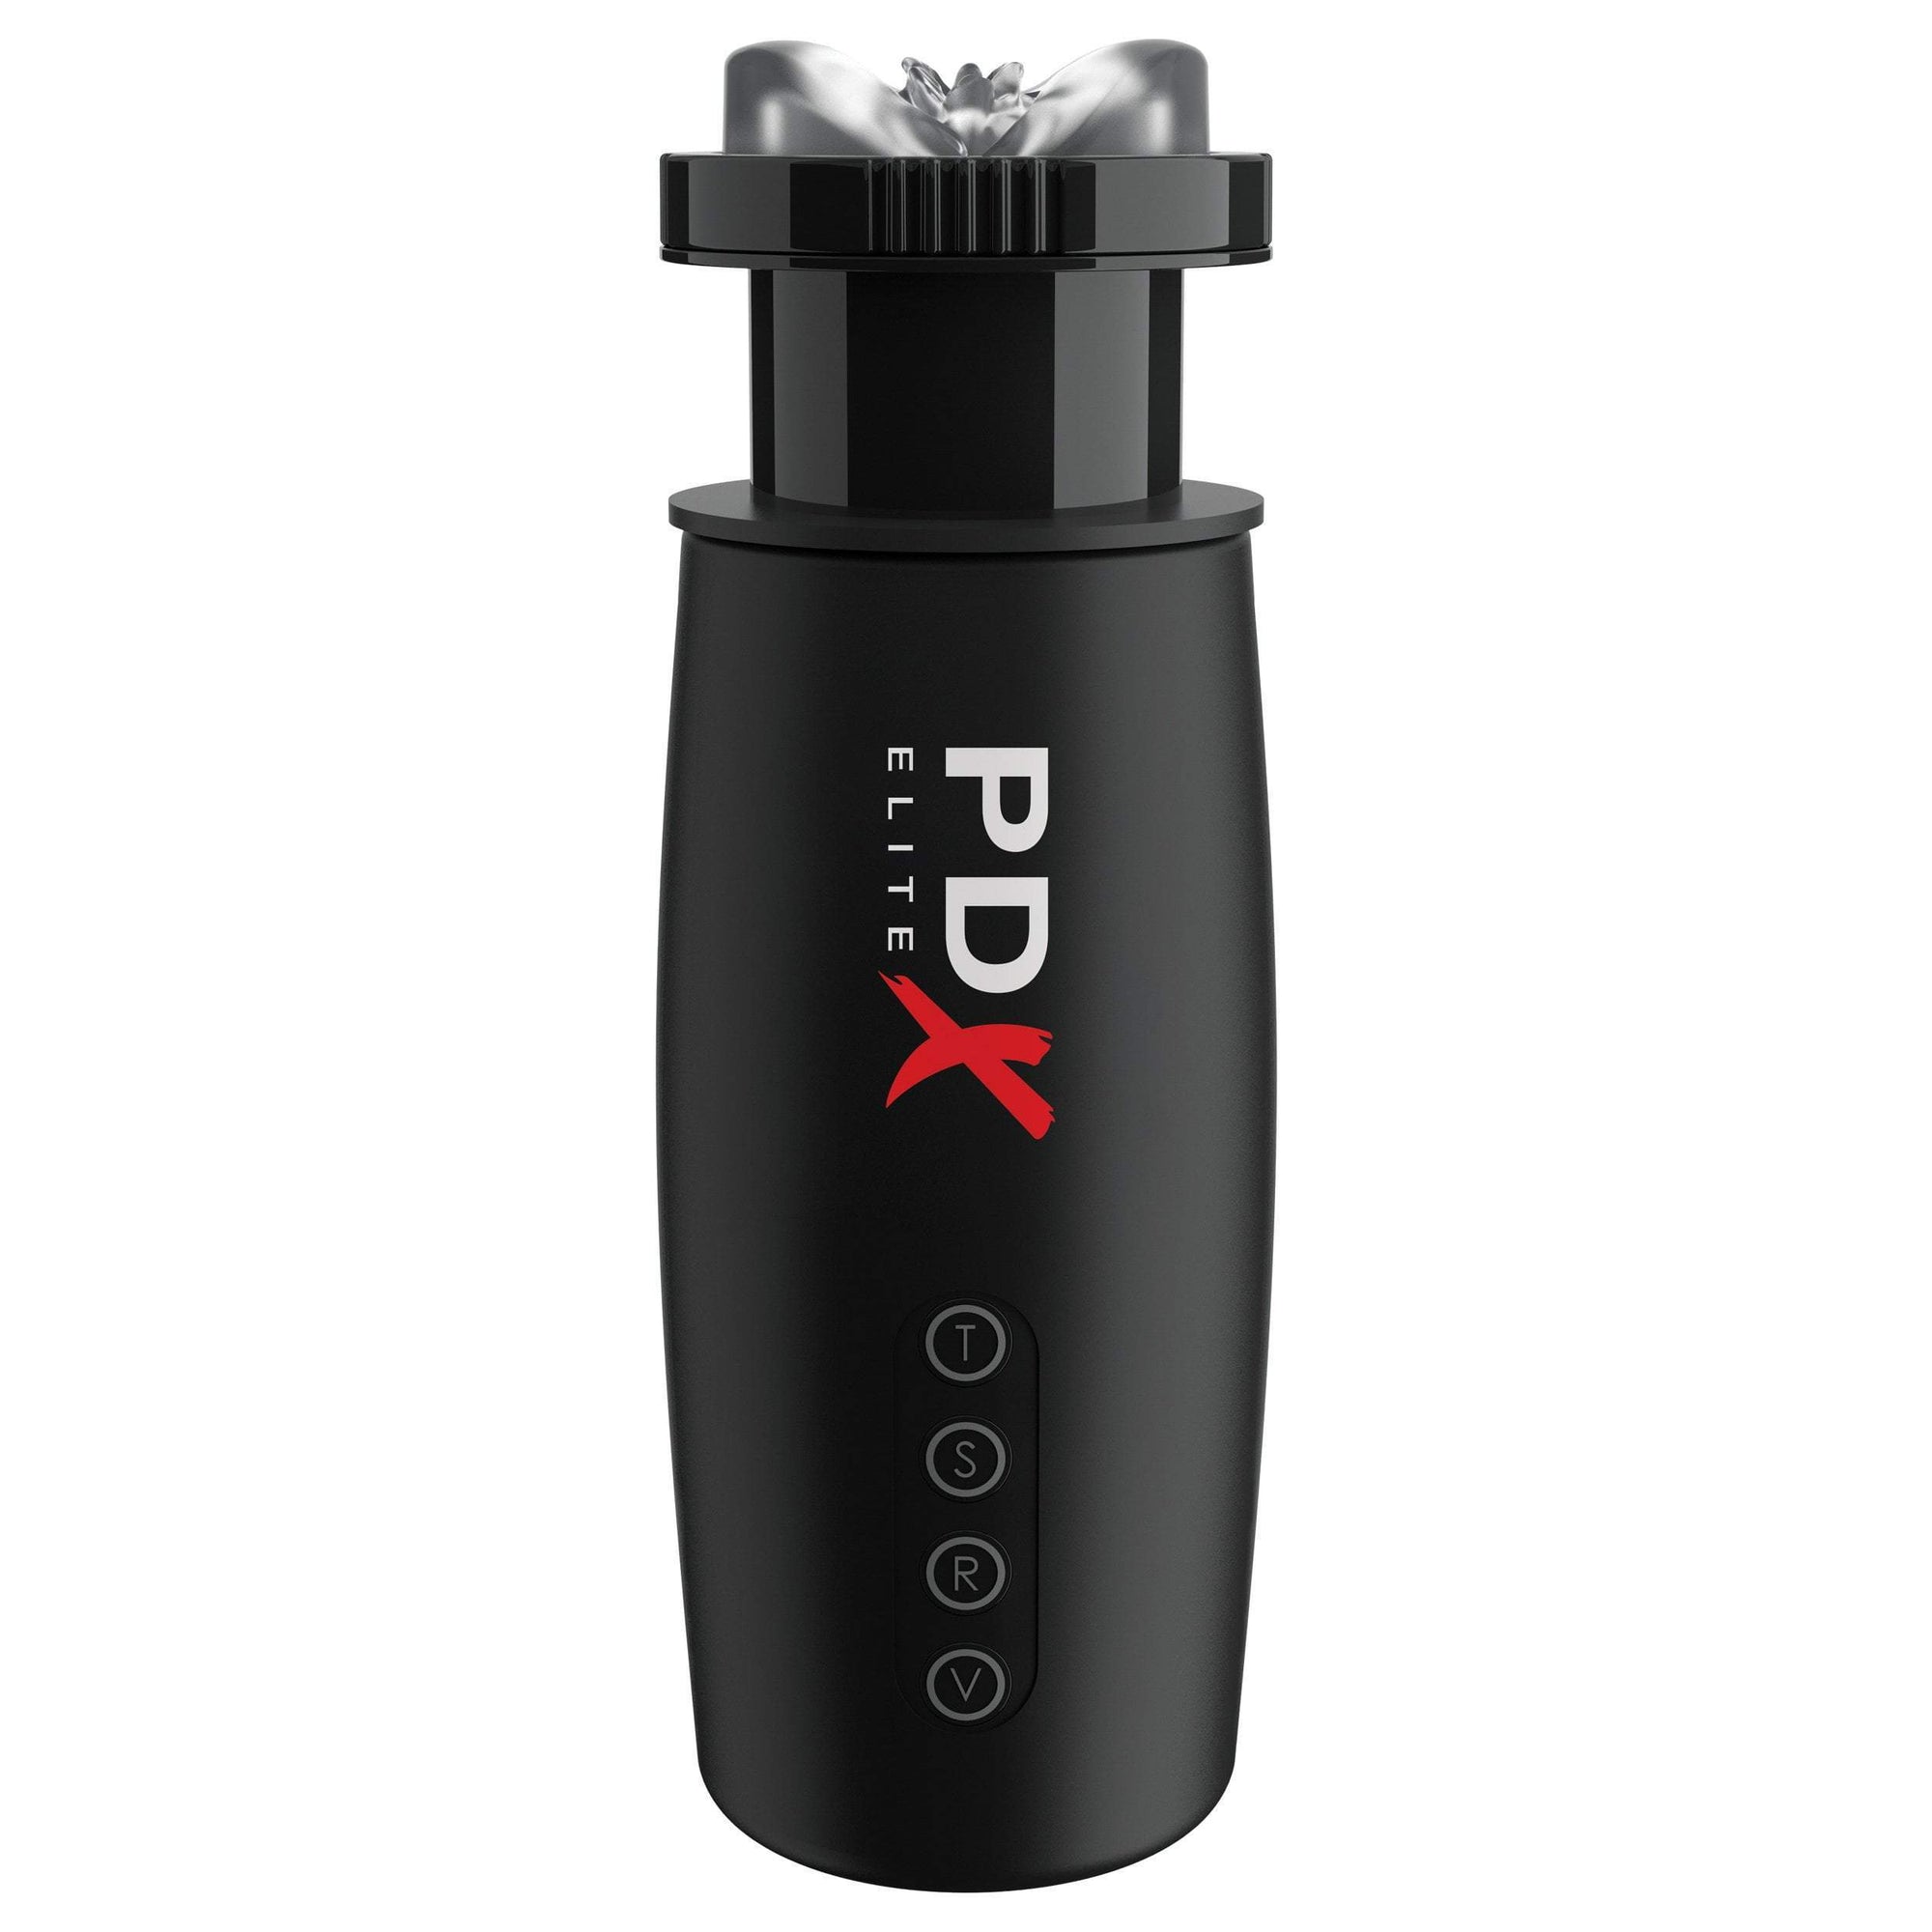 Pipedream - PDX Elite Moto Bator 2 Thrusting Mouth Masturbator (Black) Masturbator Mouth (Vibration) Rechargeable